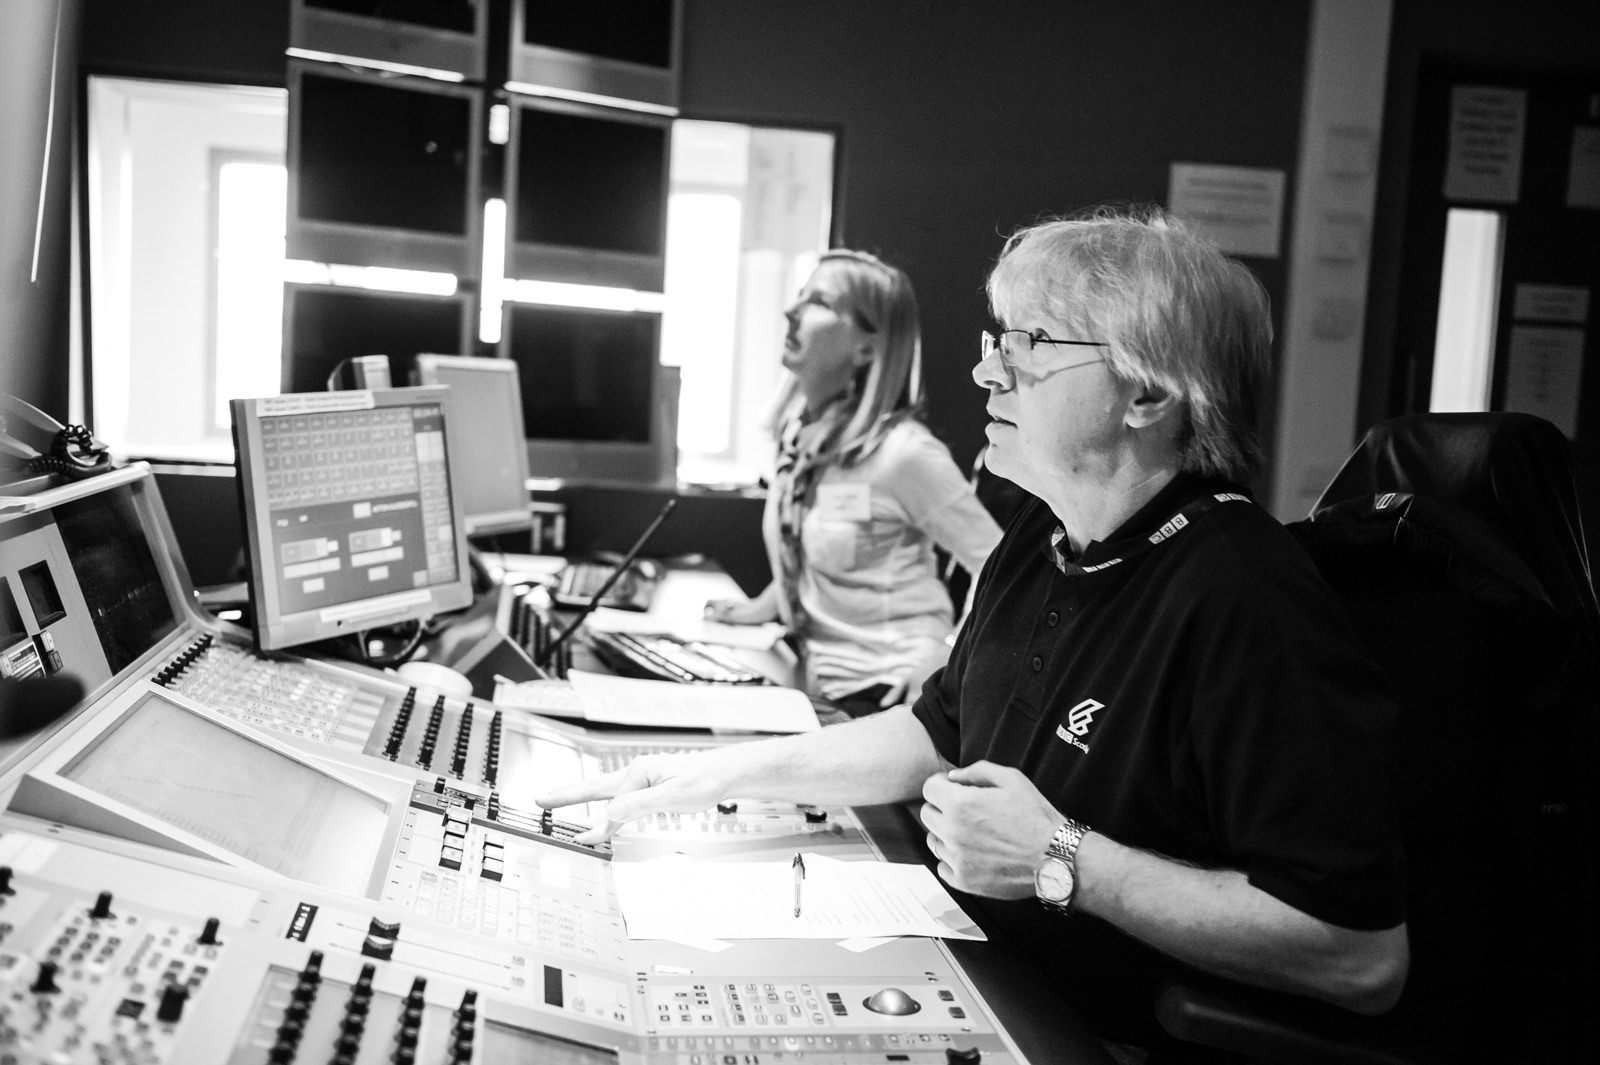  BBC Academy's 'Expert Women' event at BBC Scotland, Glasgow, 28th August 2013 